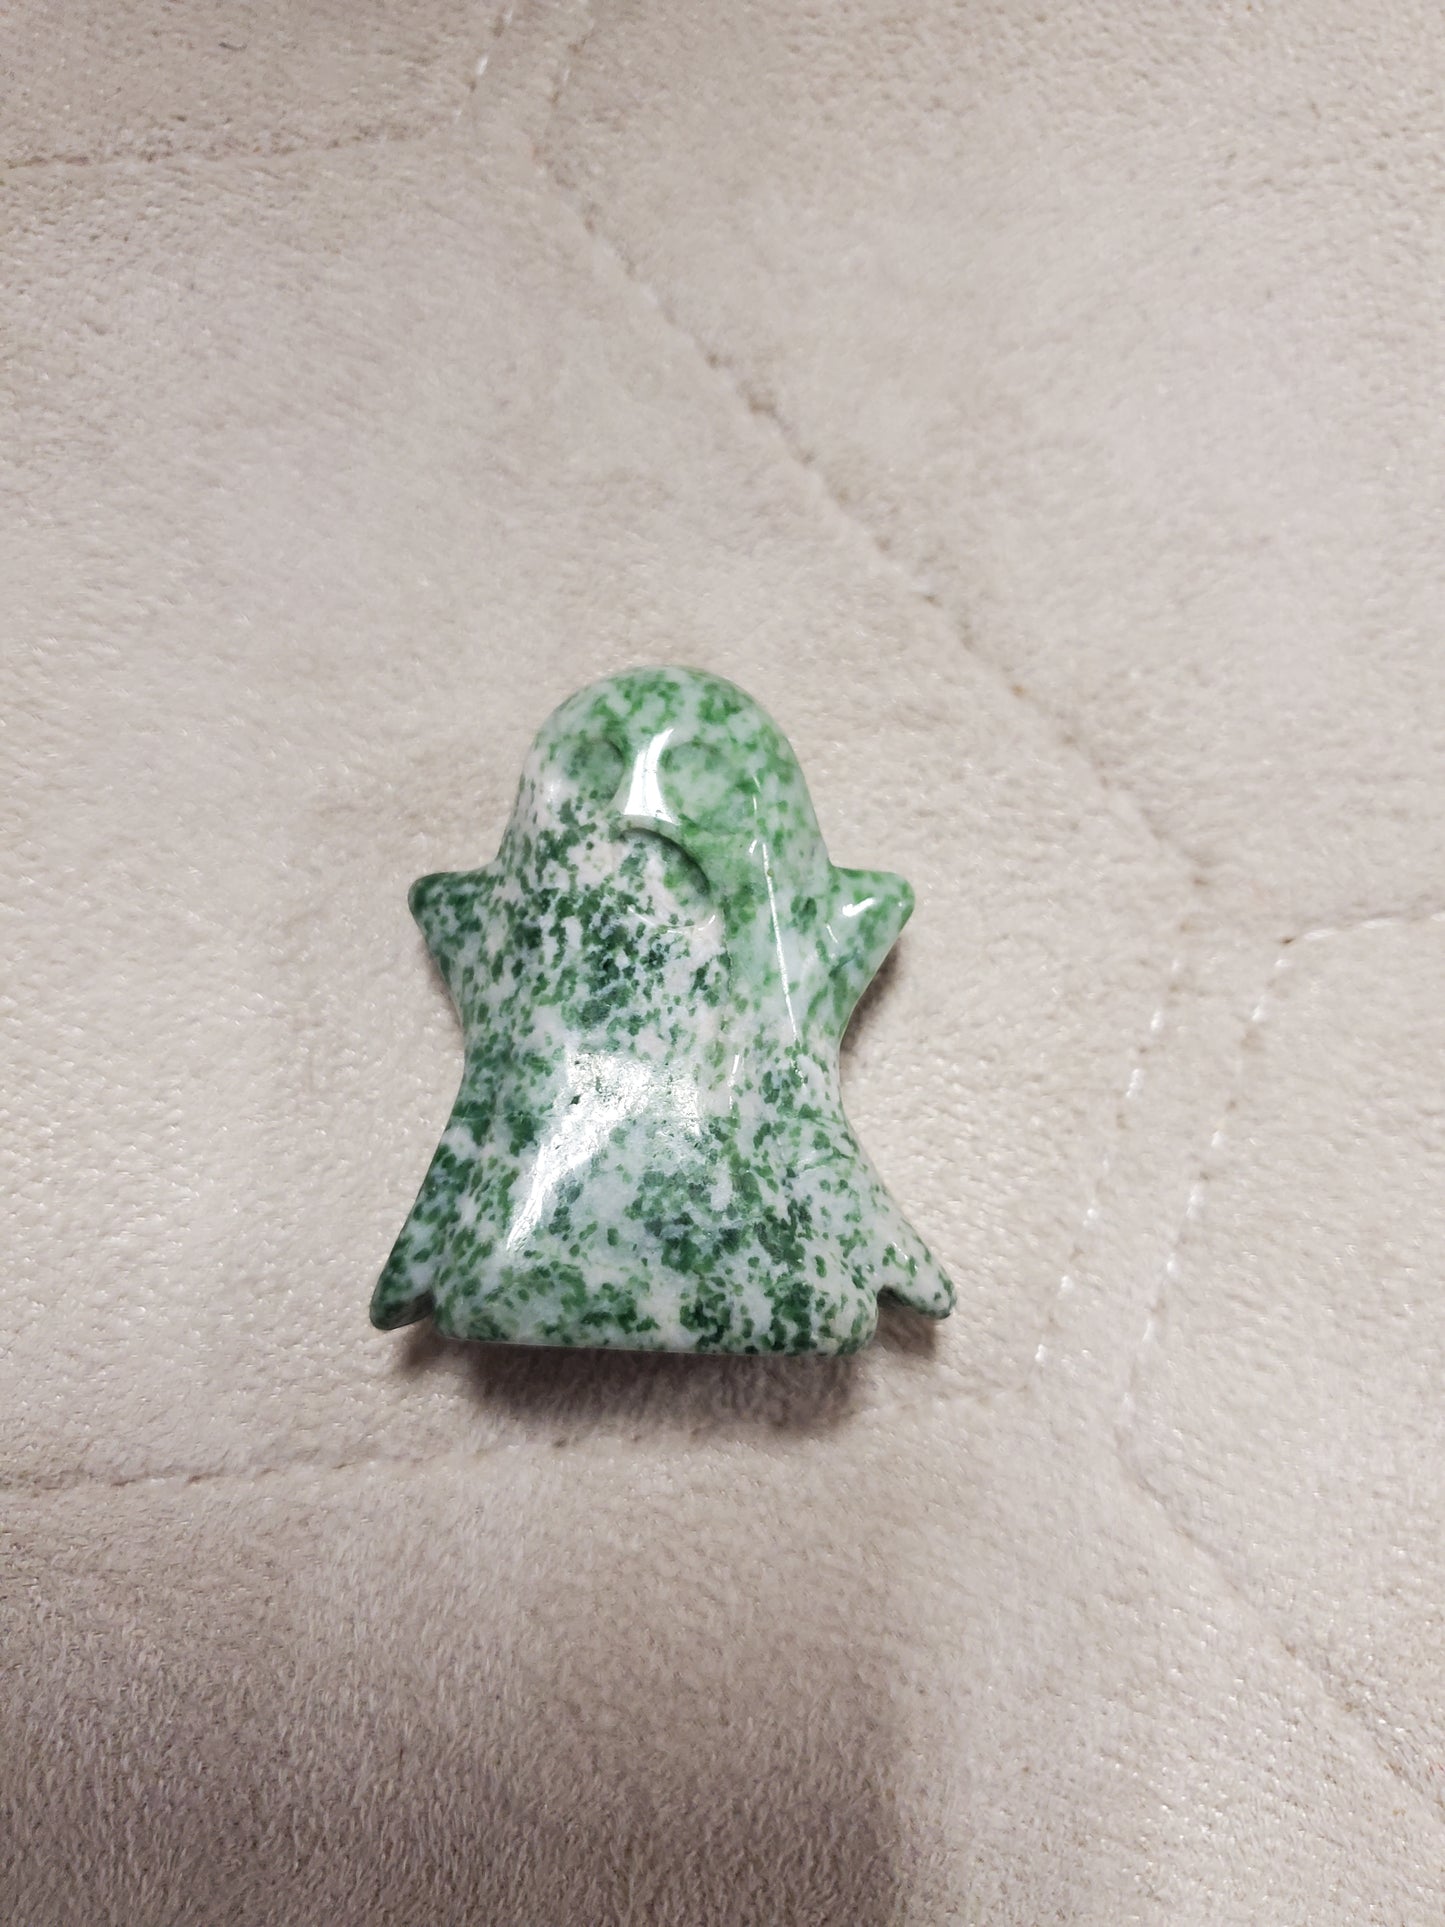 Green jasper ghost